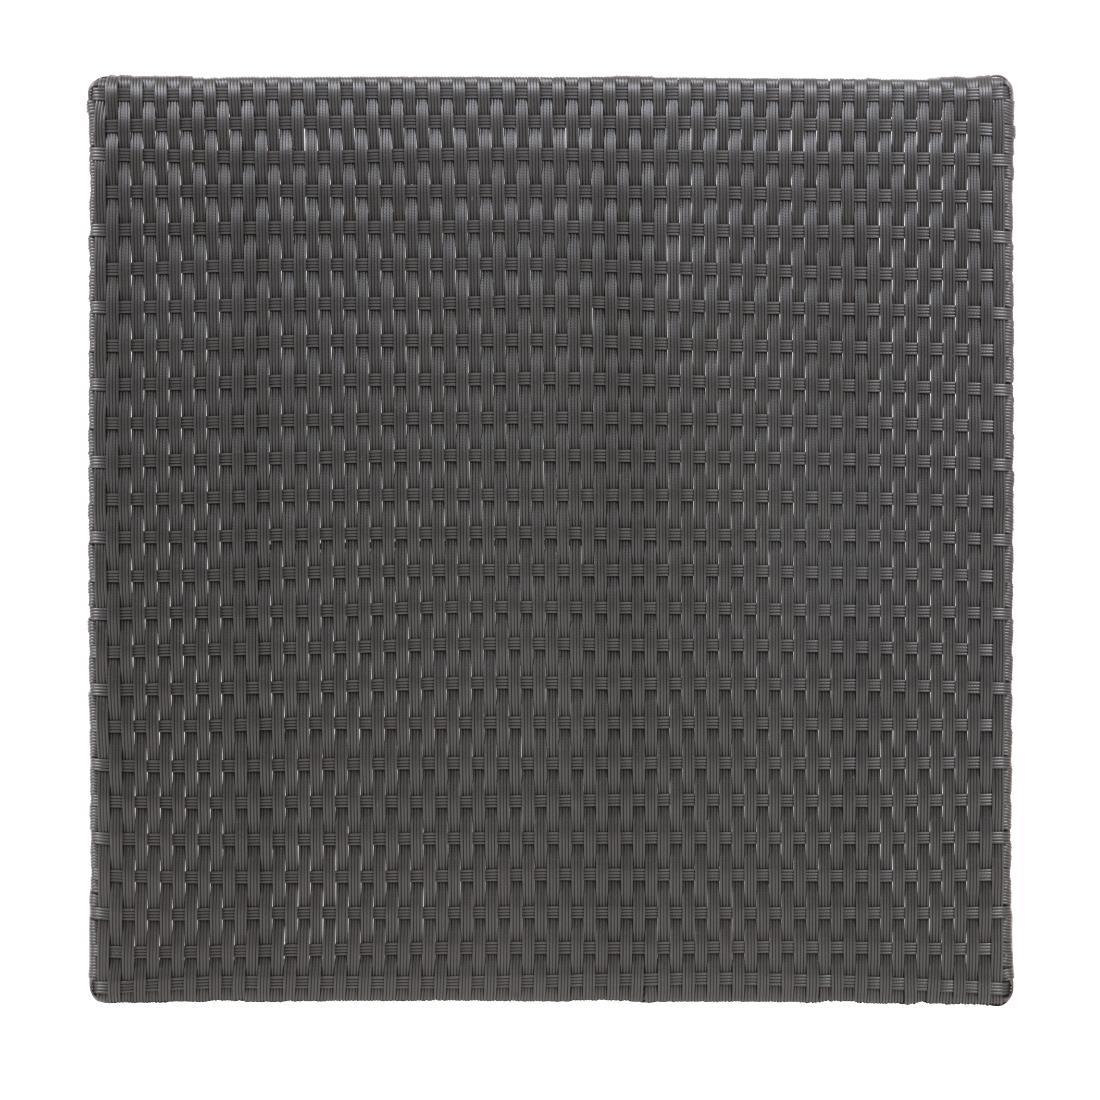 Bolero Square PE Wicker Folding Table Black 600mm - GL302  - 8